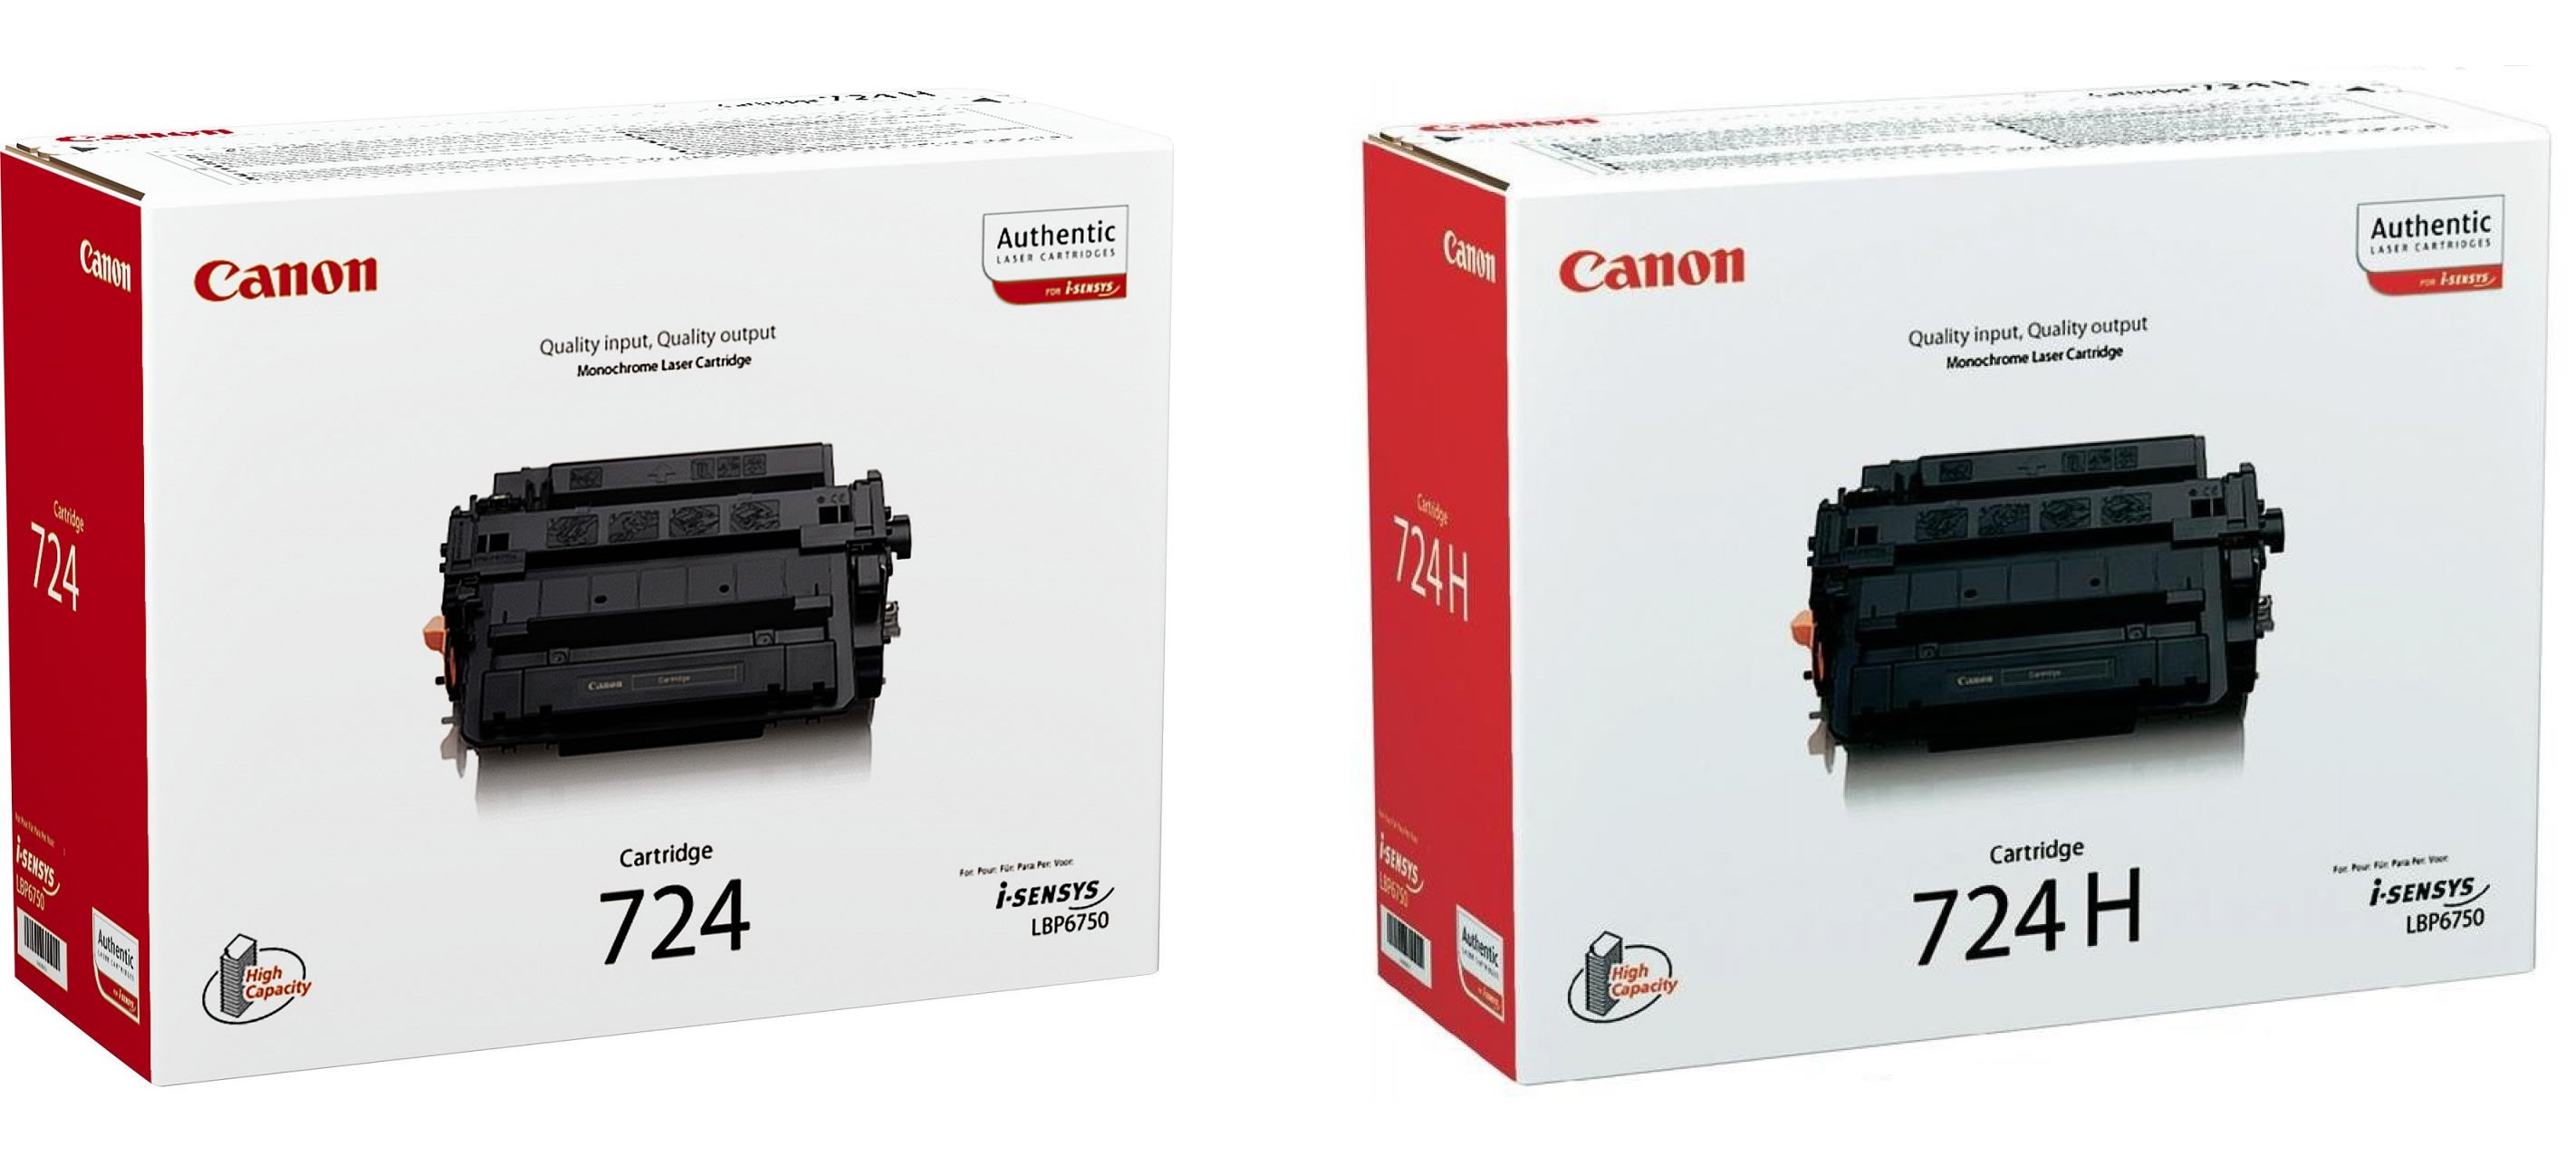 Картриджи Canon 724 Canon 724H для Canon i-Sensys LBP–6750dn Купить комплект картриджей.